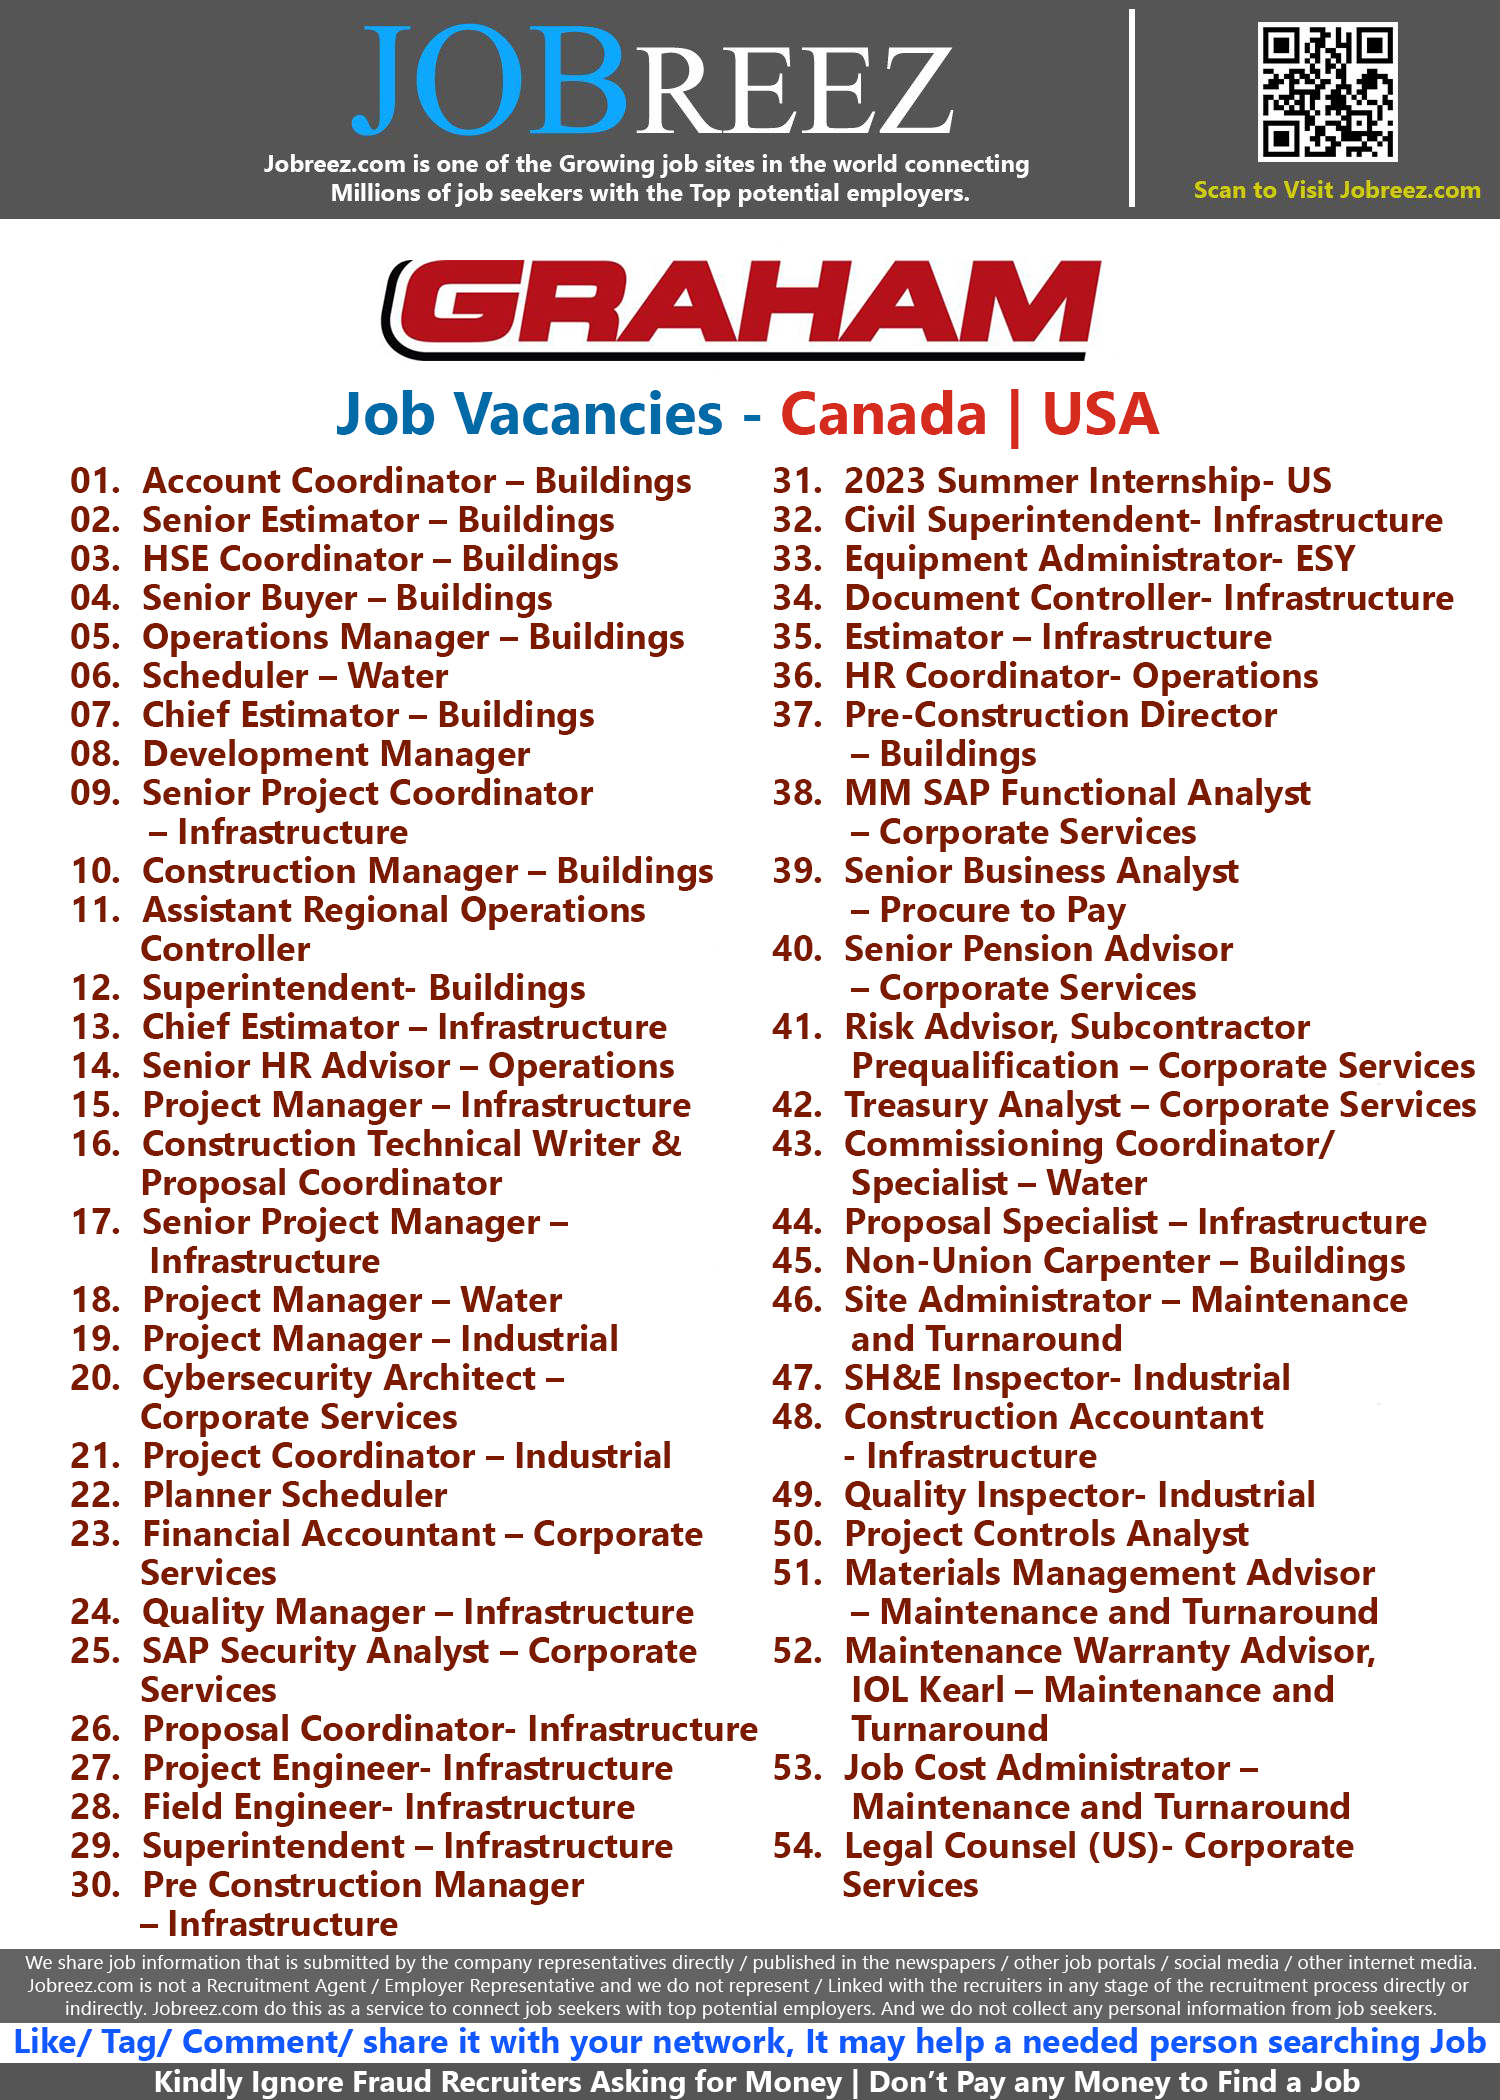 GRAHAM Job Vacancies - Canada | USA